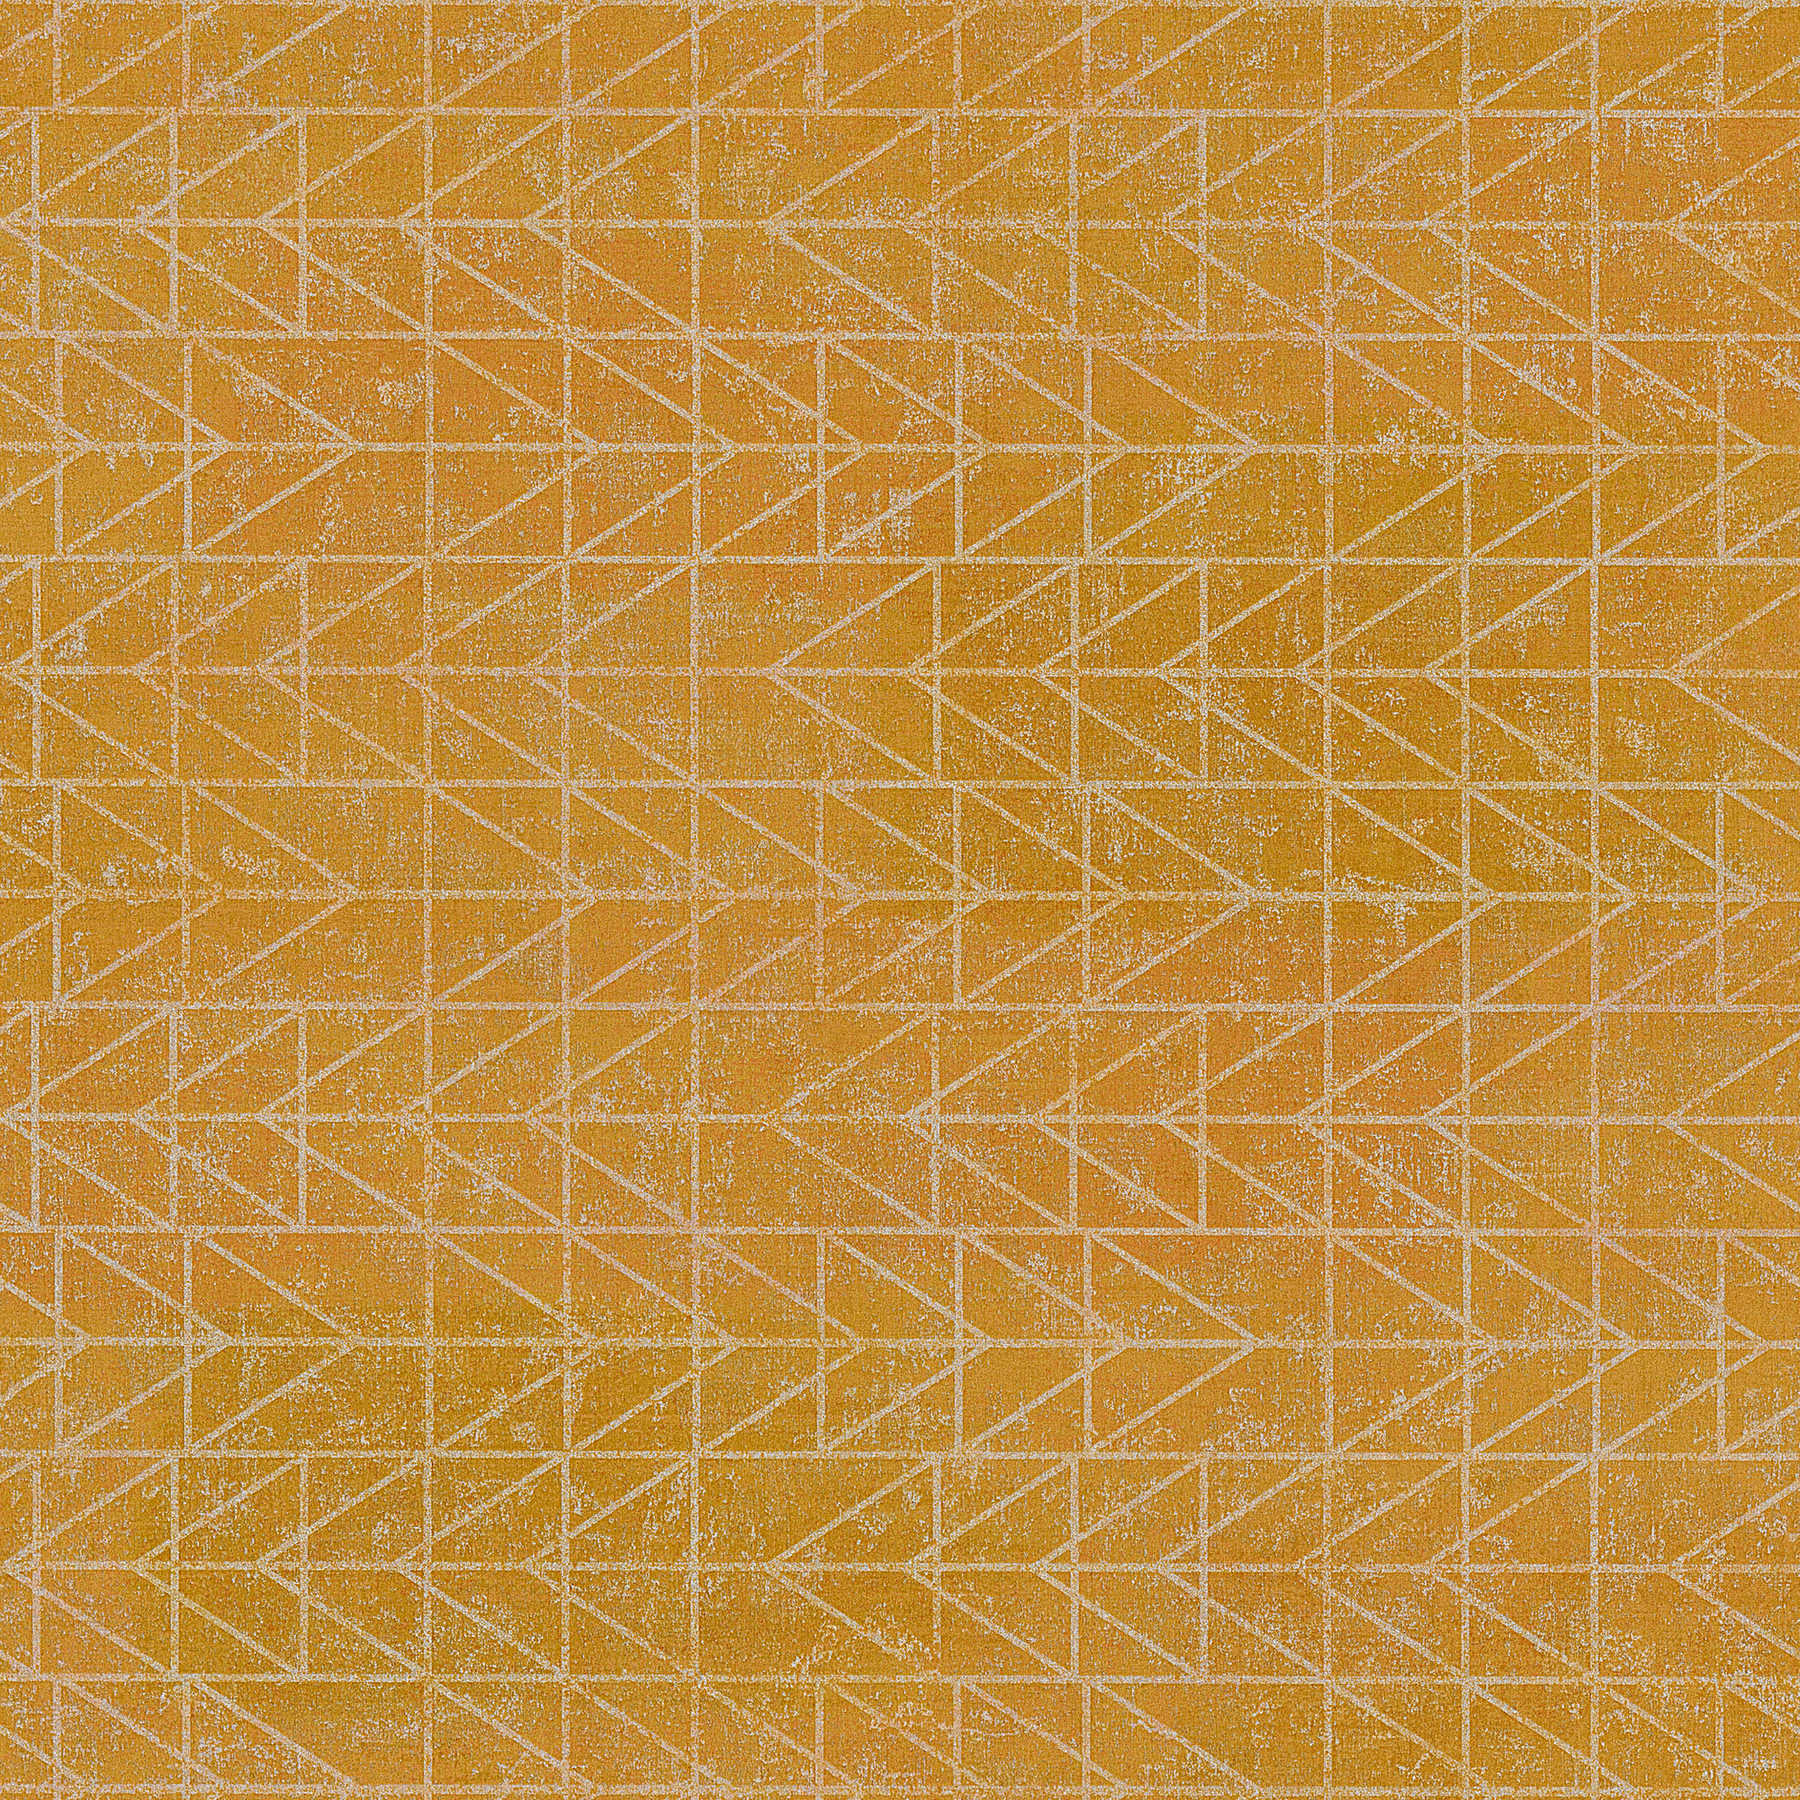 Geometric ethnic wallpaper indigenous Navajo design - yellow, gold
